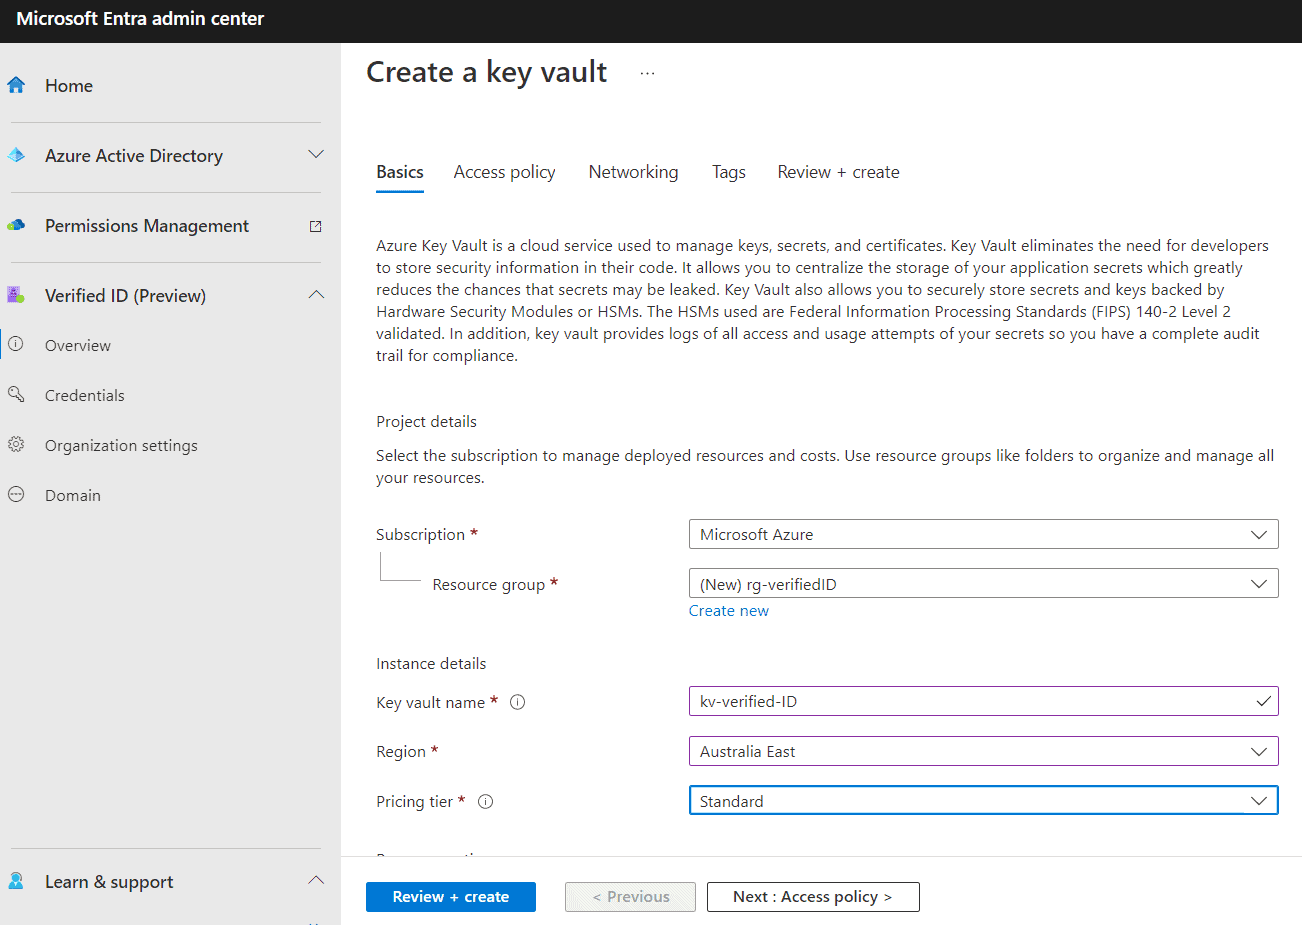 Create a key vault for verified ID